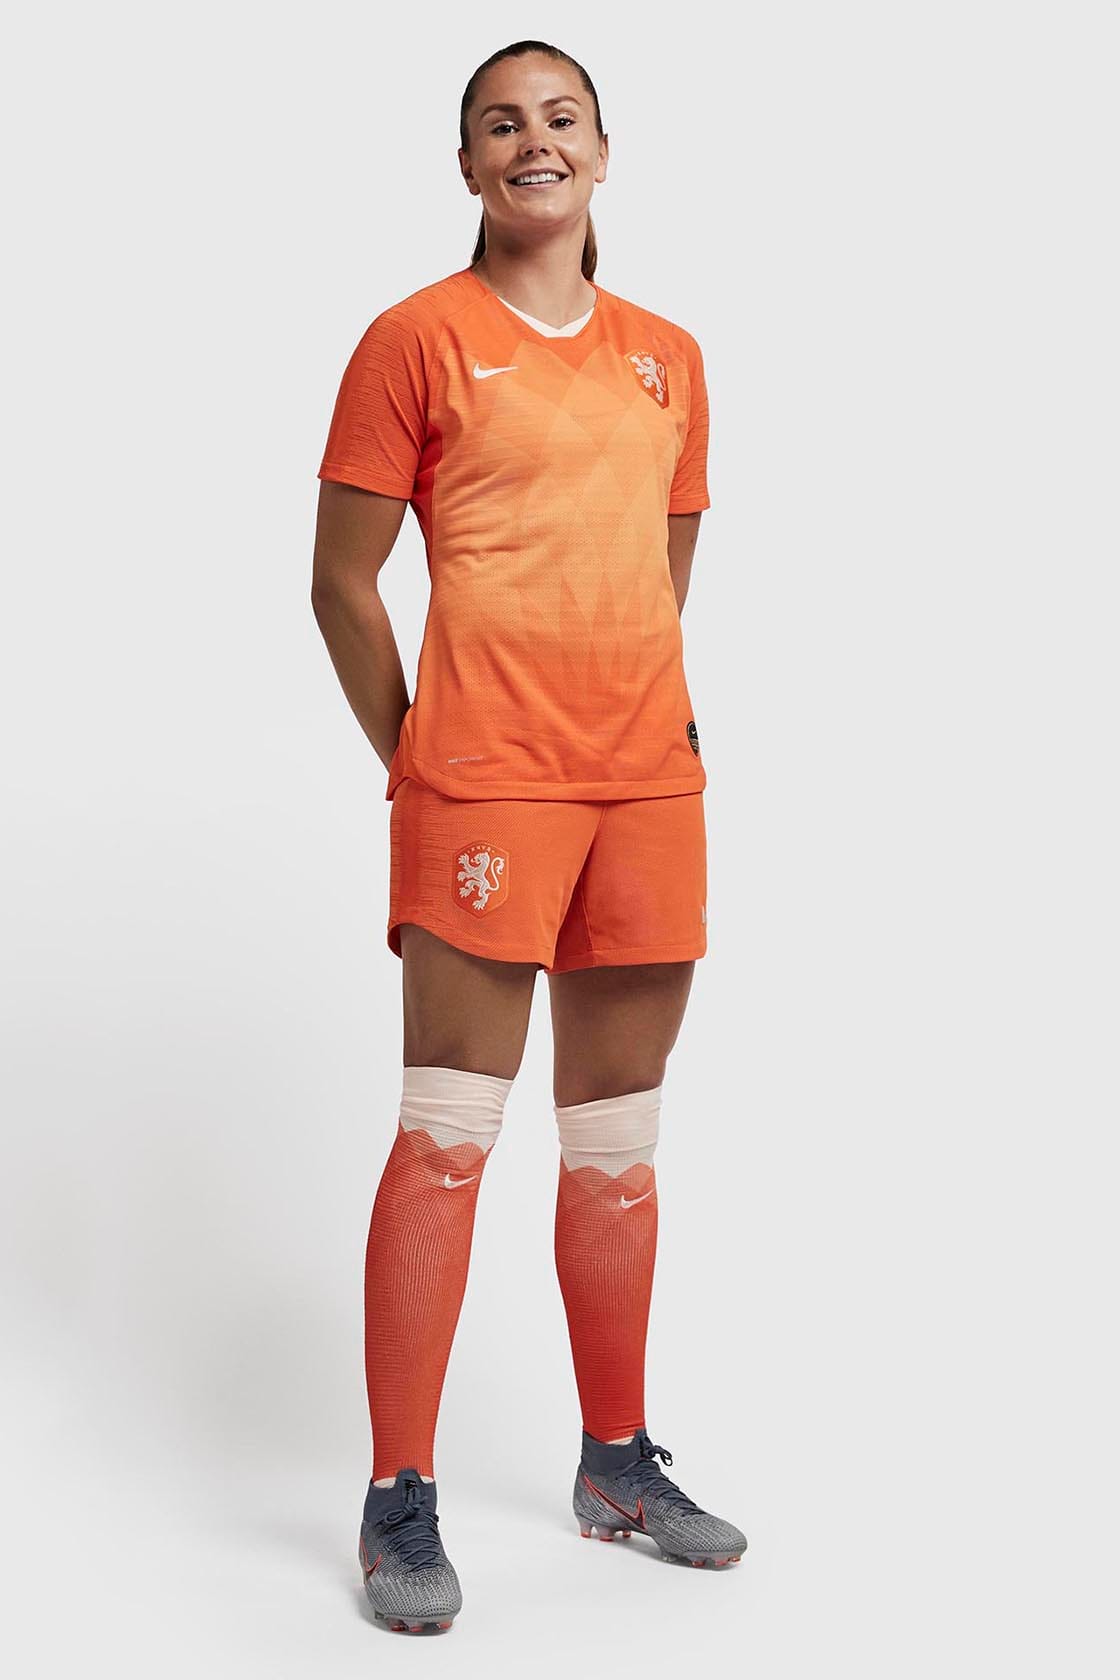 nike women's world cup kit